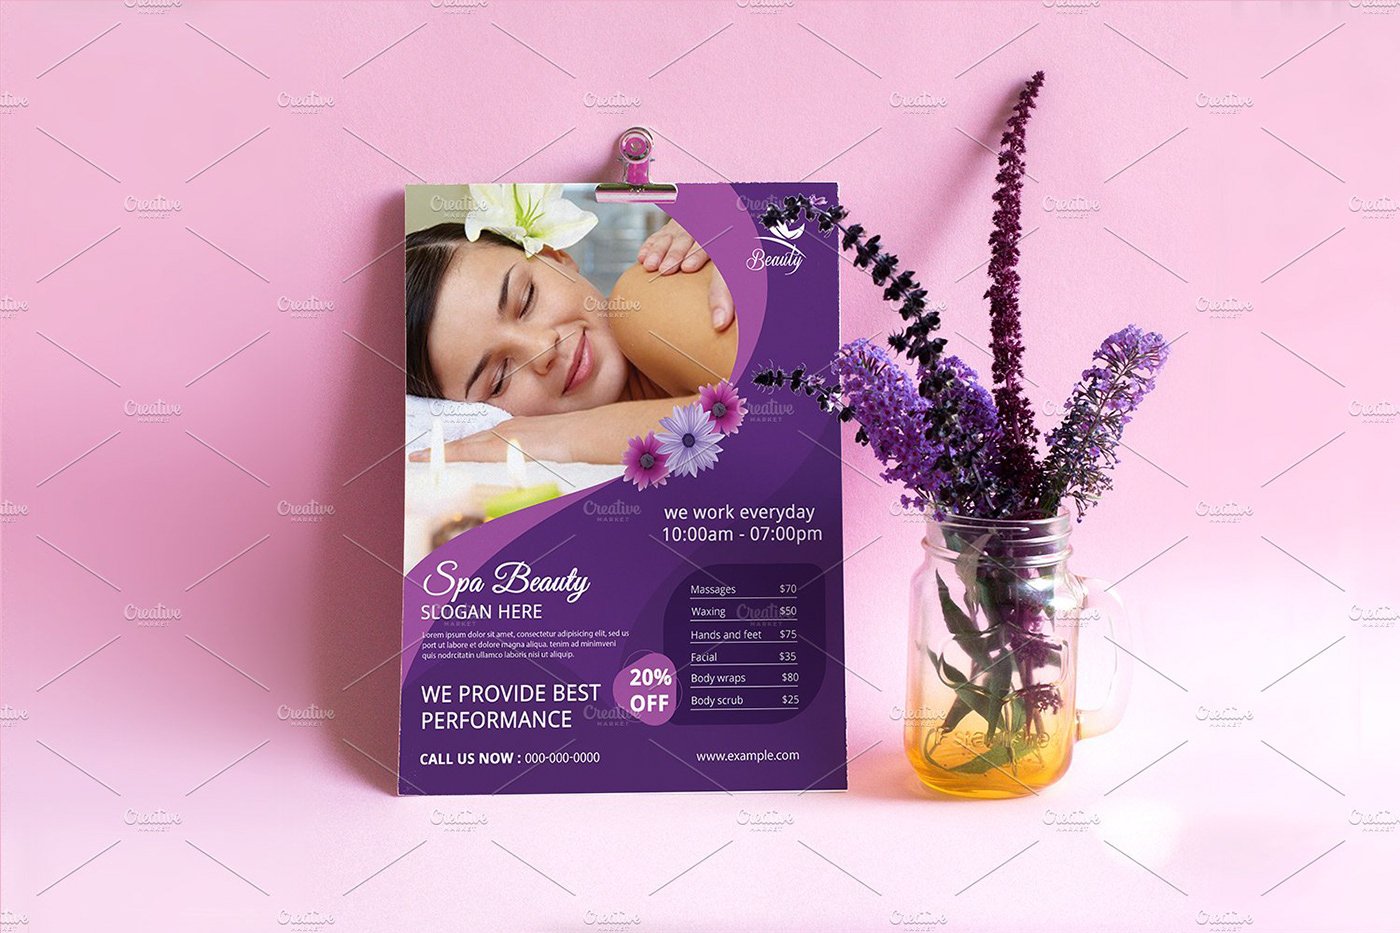 Advertising  beauty shop bueaty   business center ms word photoshop template sap beauty flyer spa & beauty spa flyer